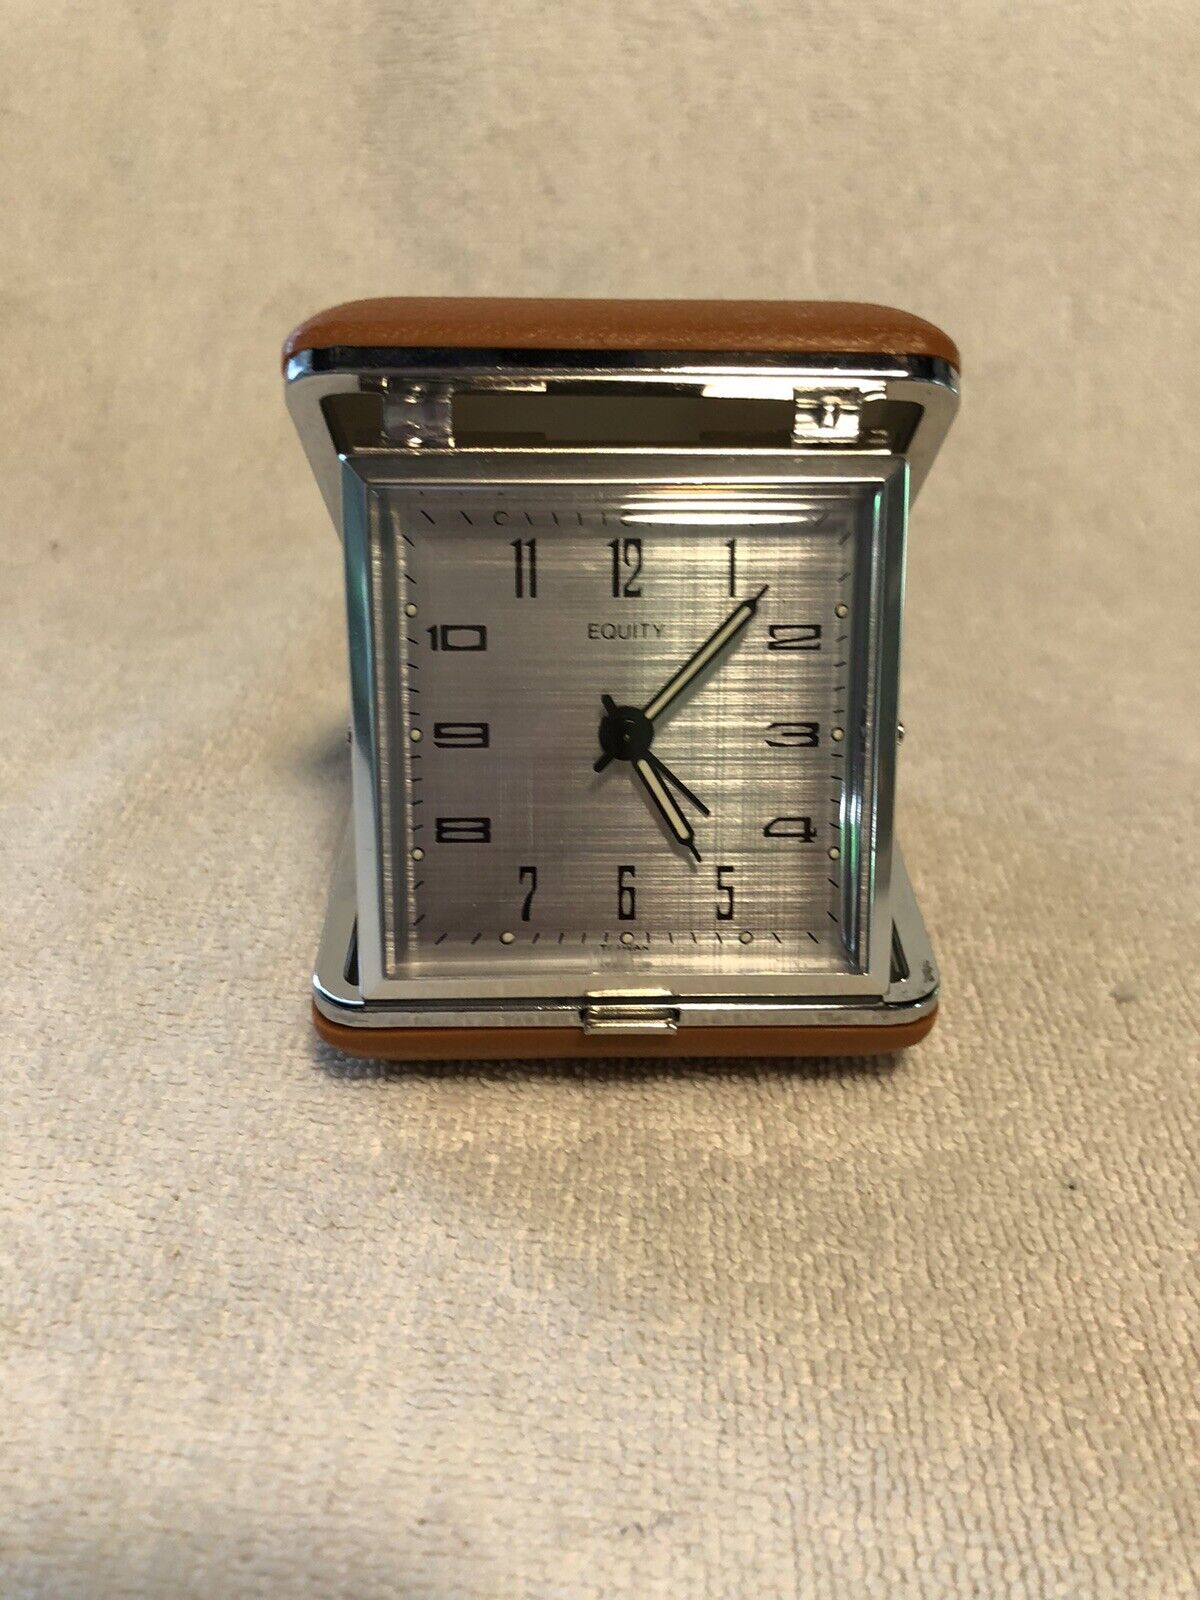 Vintage Brown Equity Travel Alarm Clock